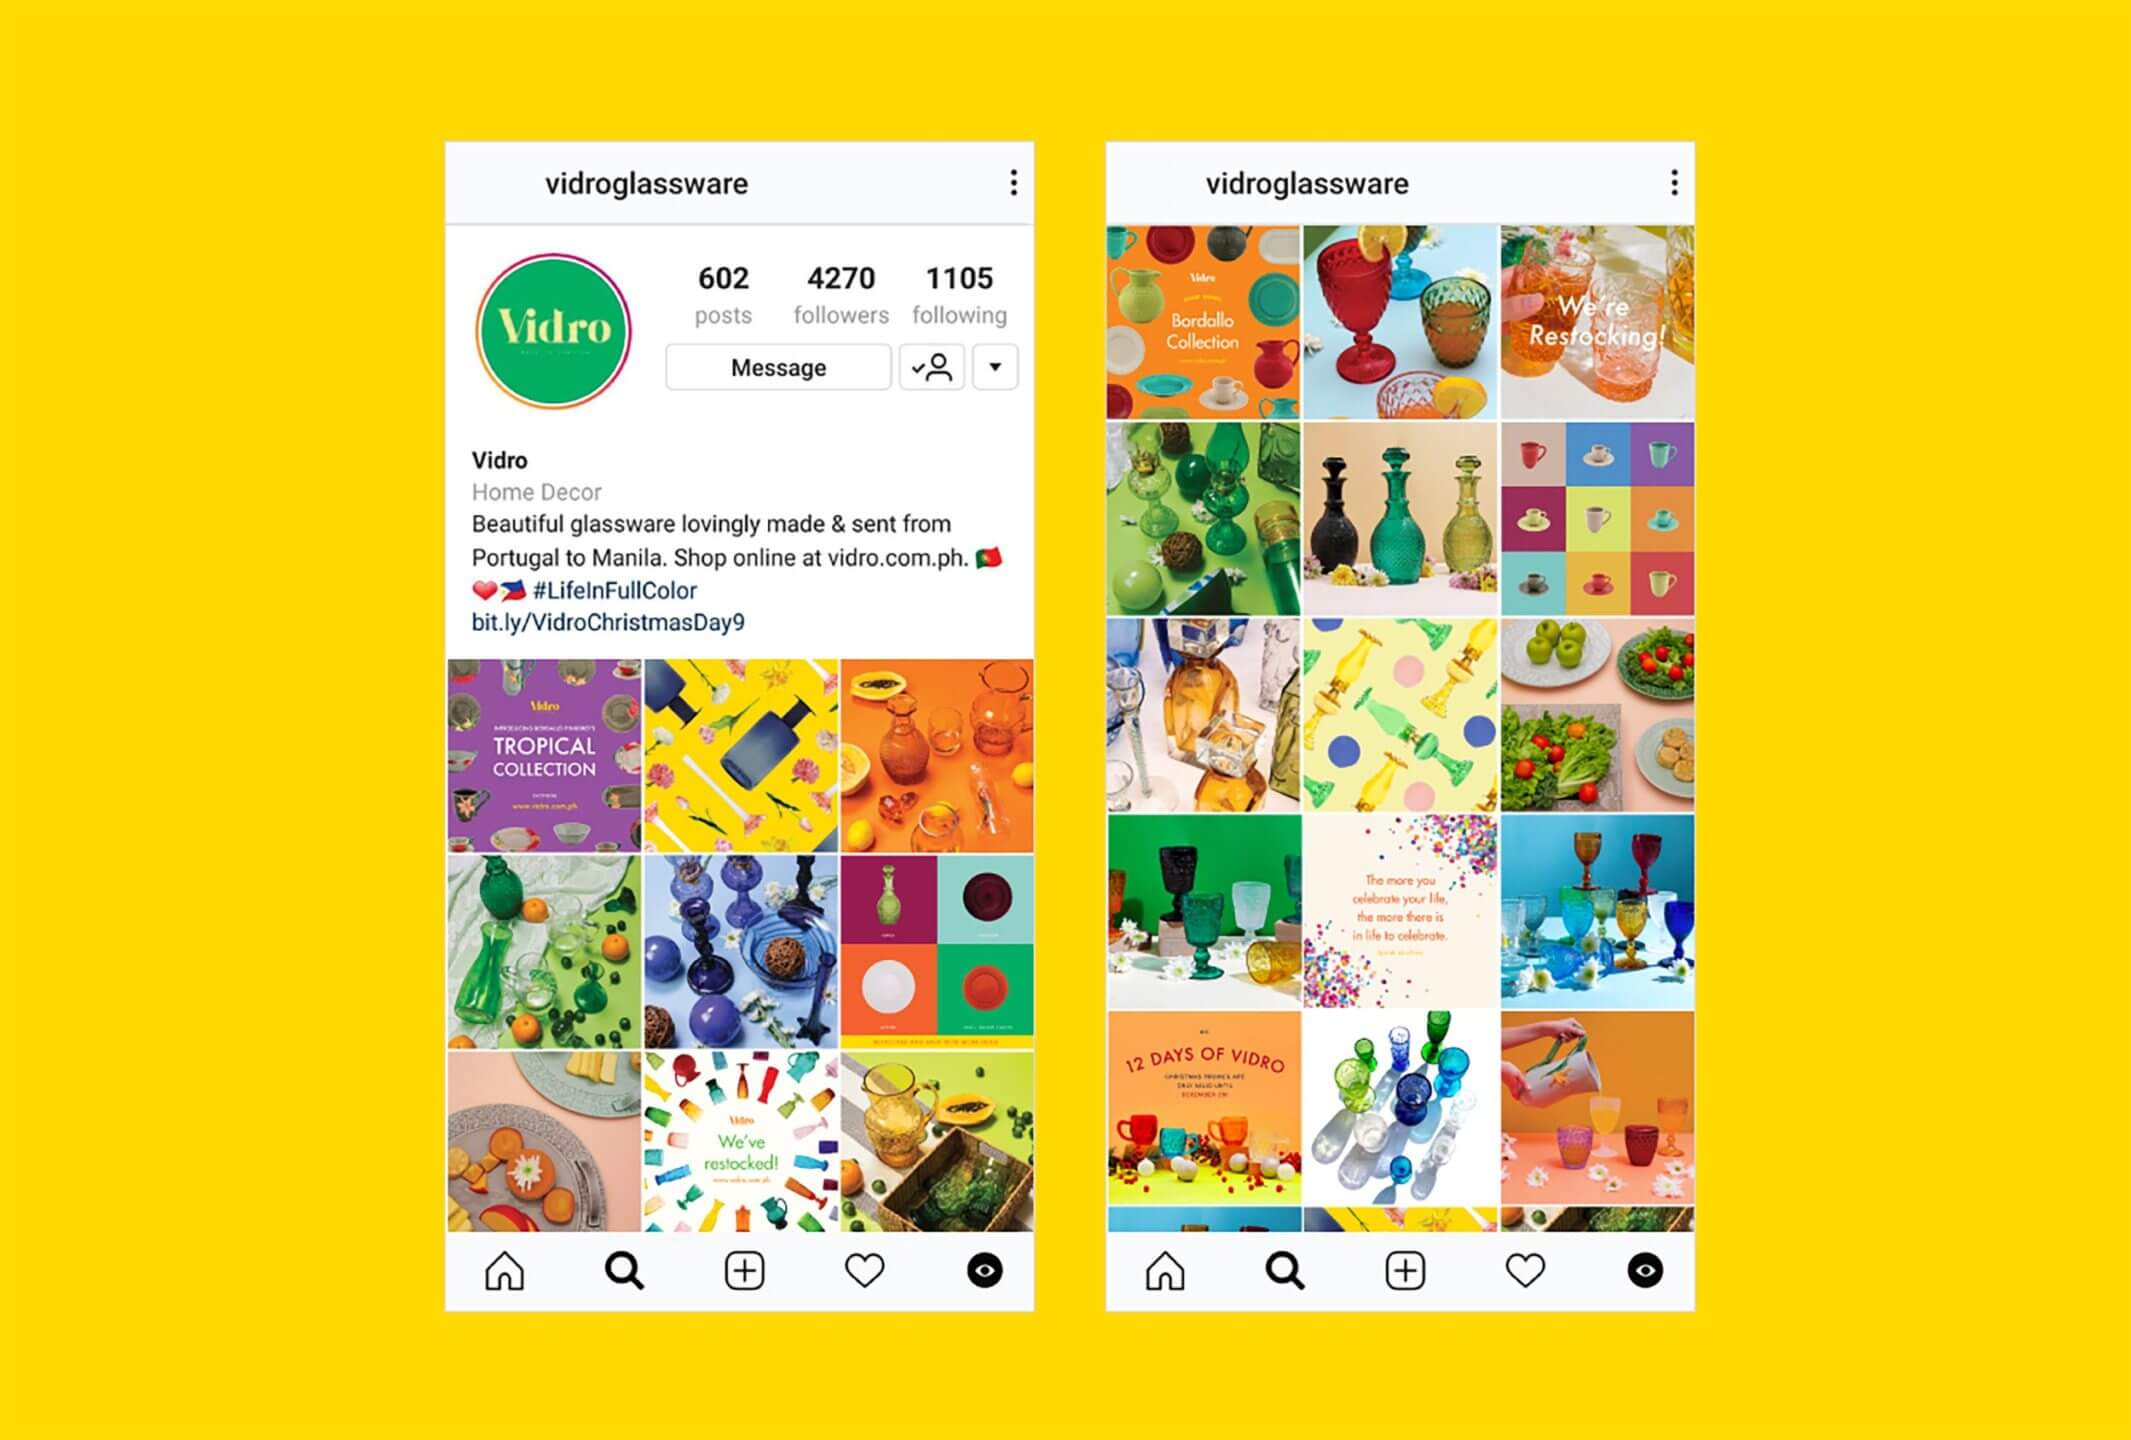 Colorful social media grid and content plan for Portuguese glassware brand Vidro